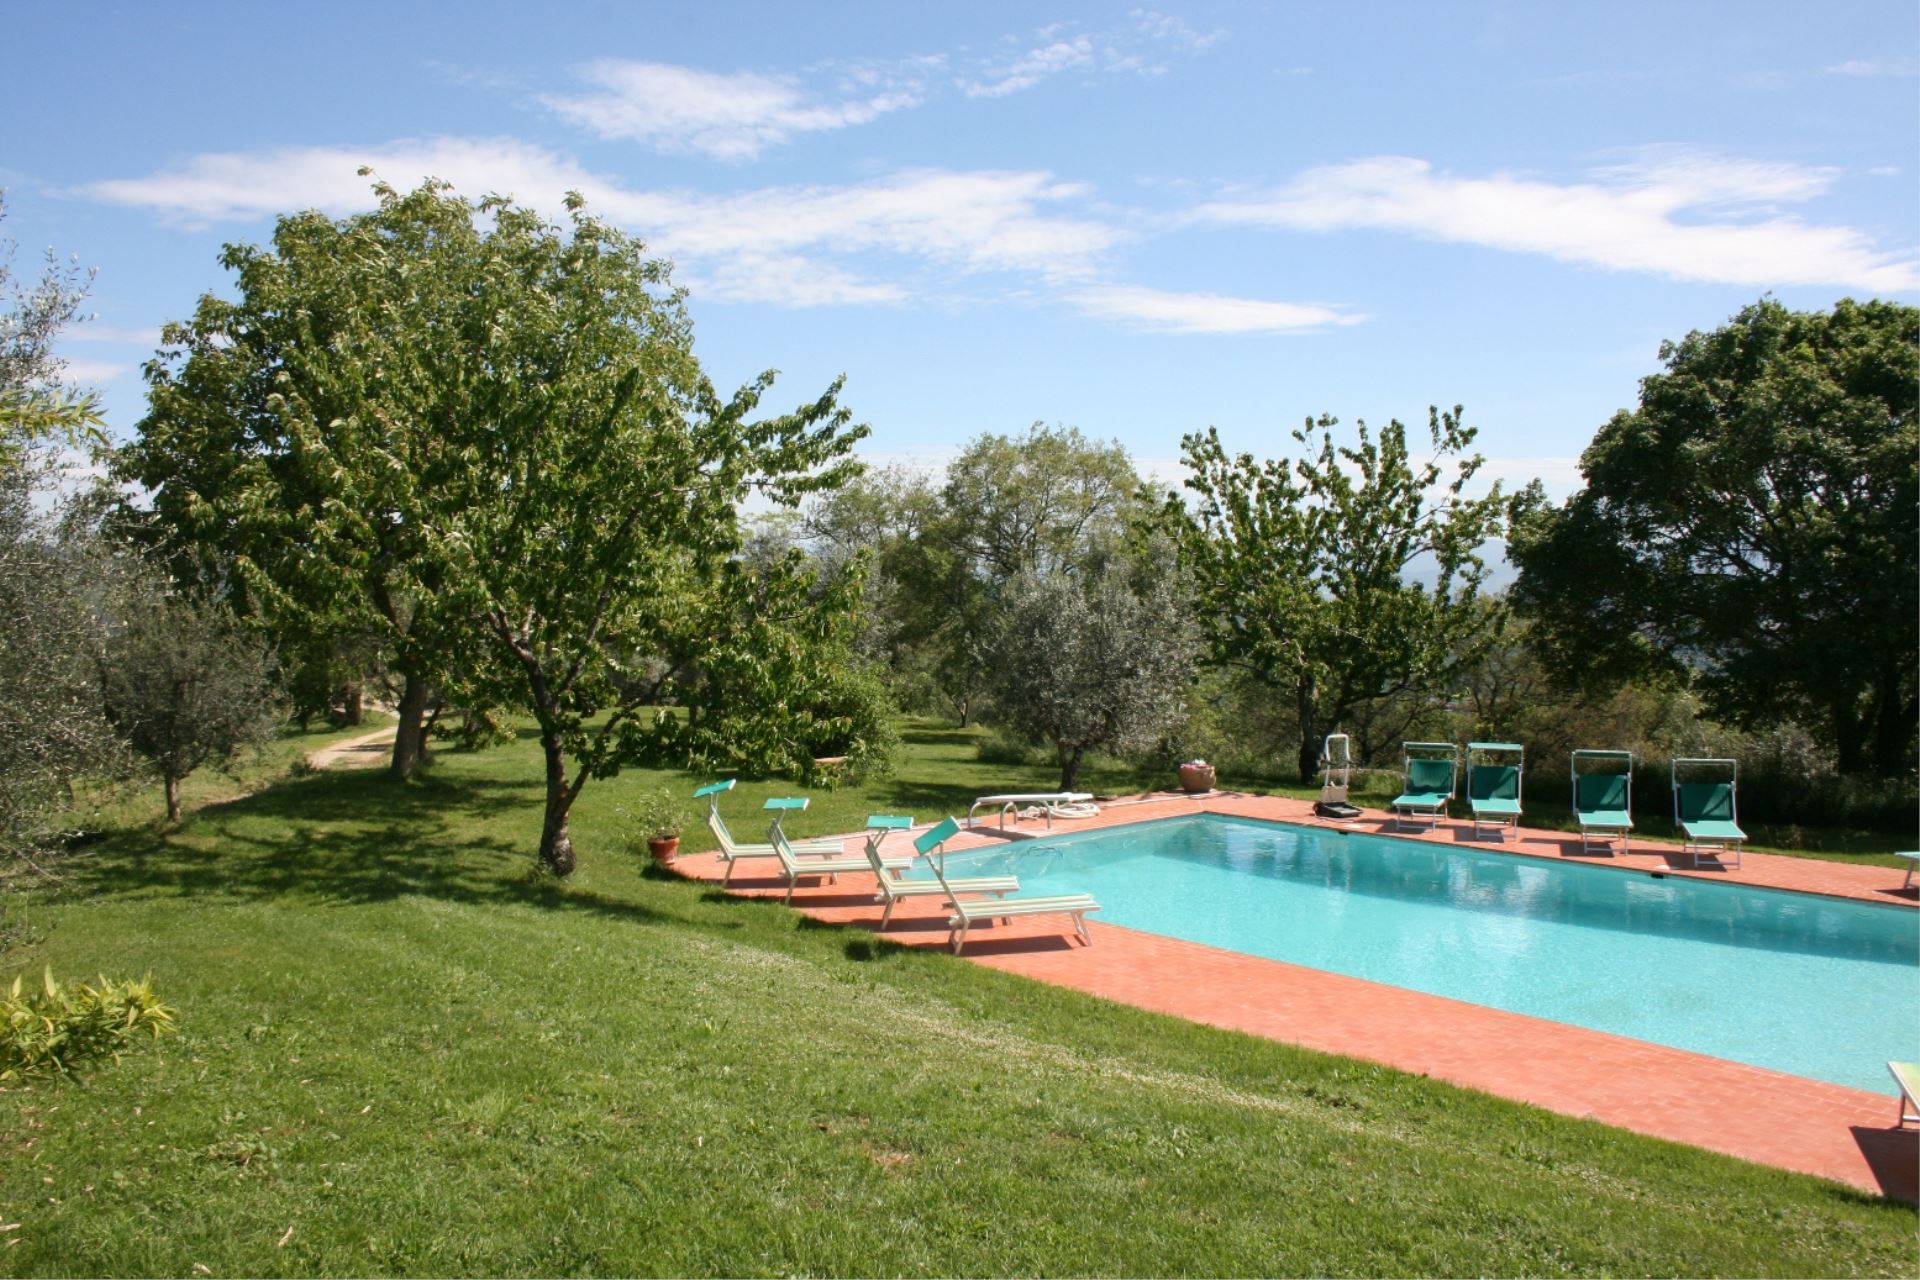 456_a42c3c9_Agriturismo Bevignano, Arezzo Siena, zwembad, tennisbaan, olijfolie, kindvriendelijk (5)